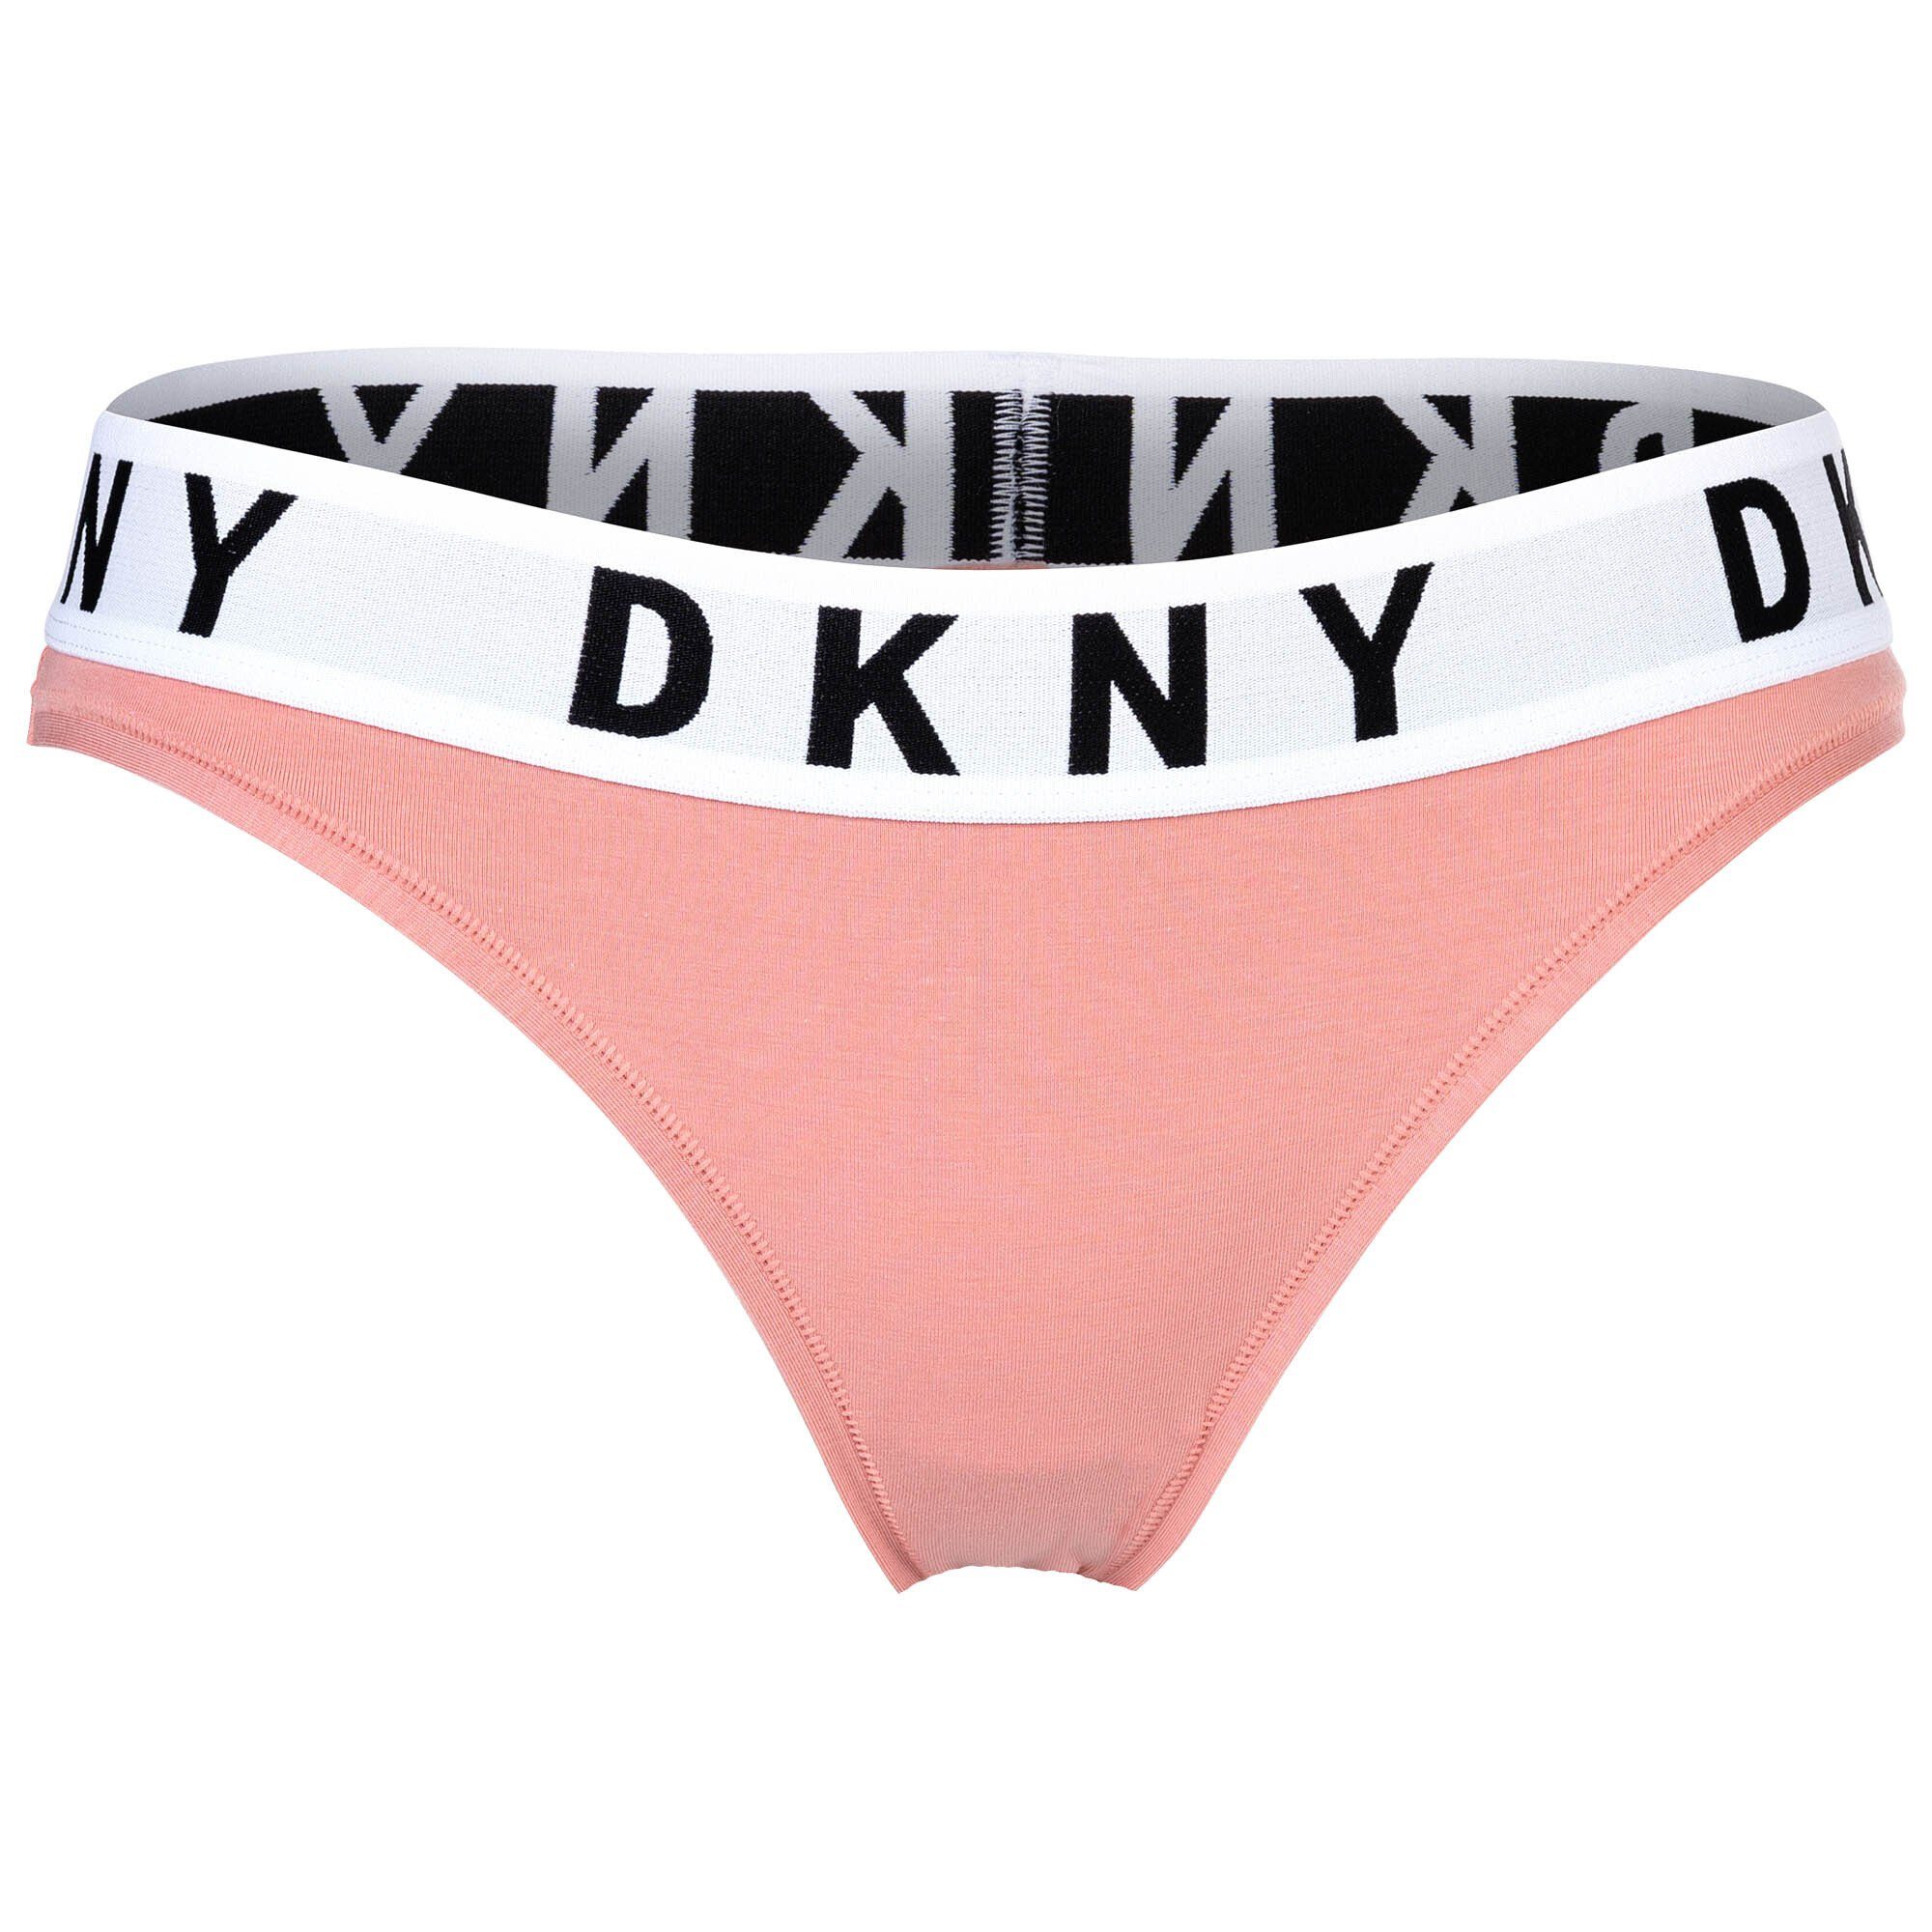 DKNY Panty Damen Slip - Brief, Cotton Modal Stretch Altrosa